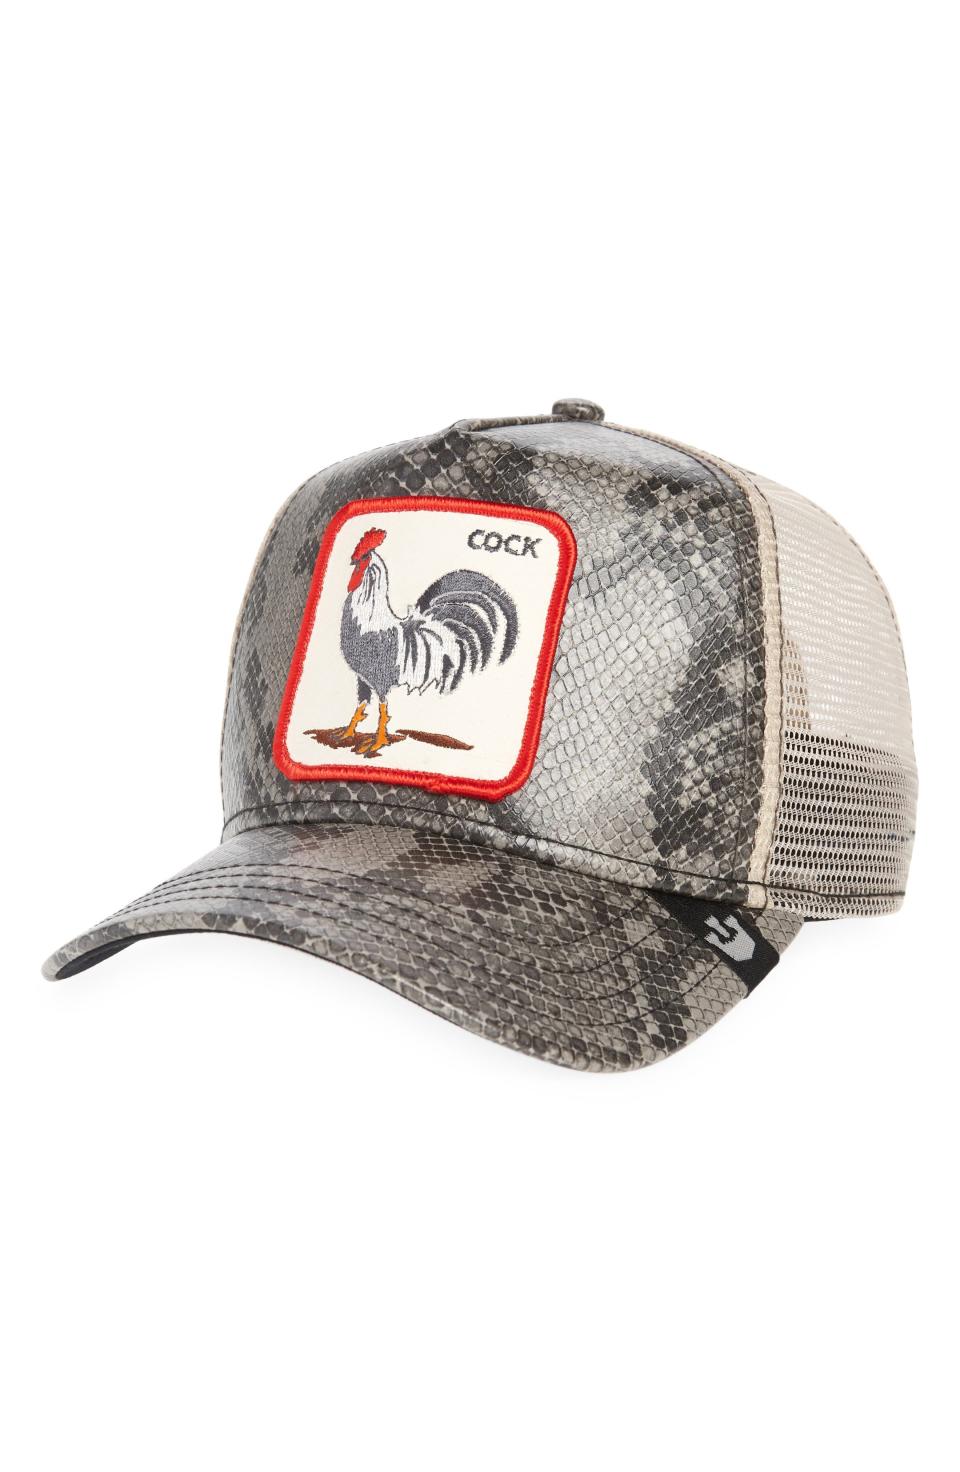 Rooster Rattler Trucker Hat